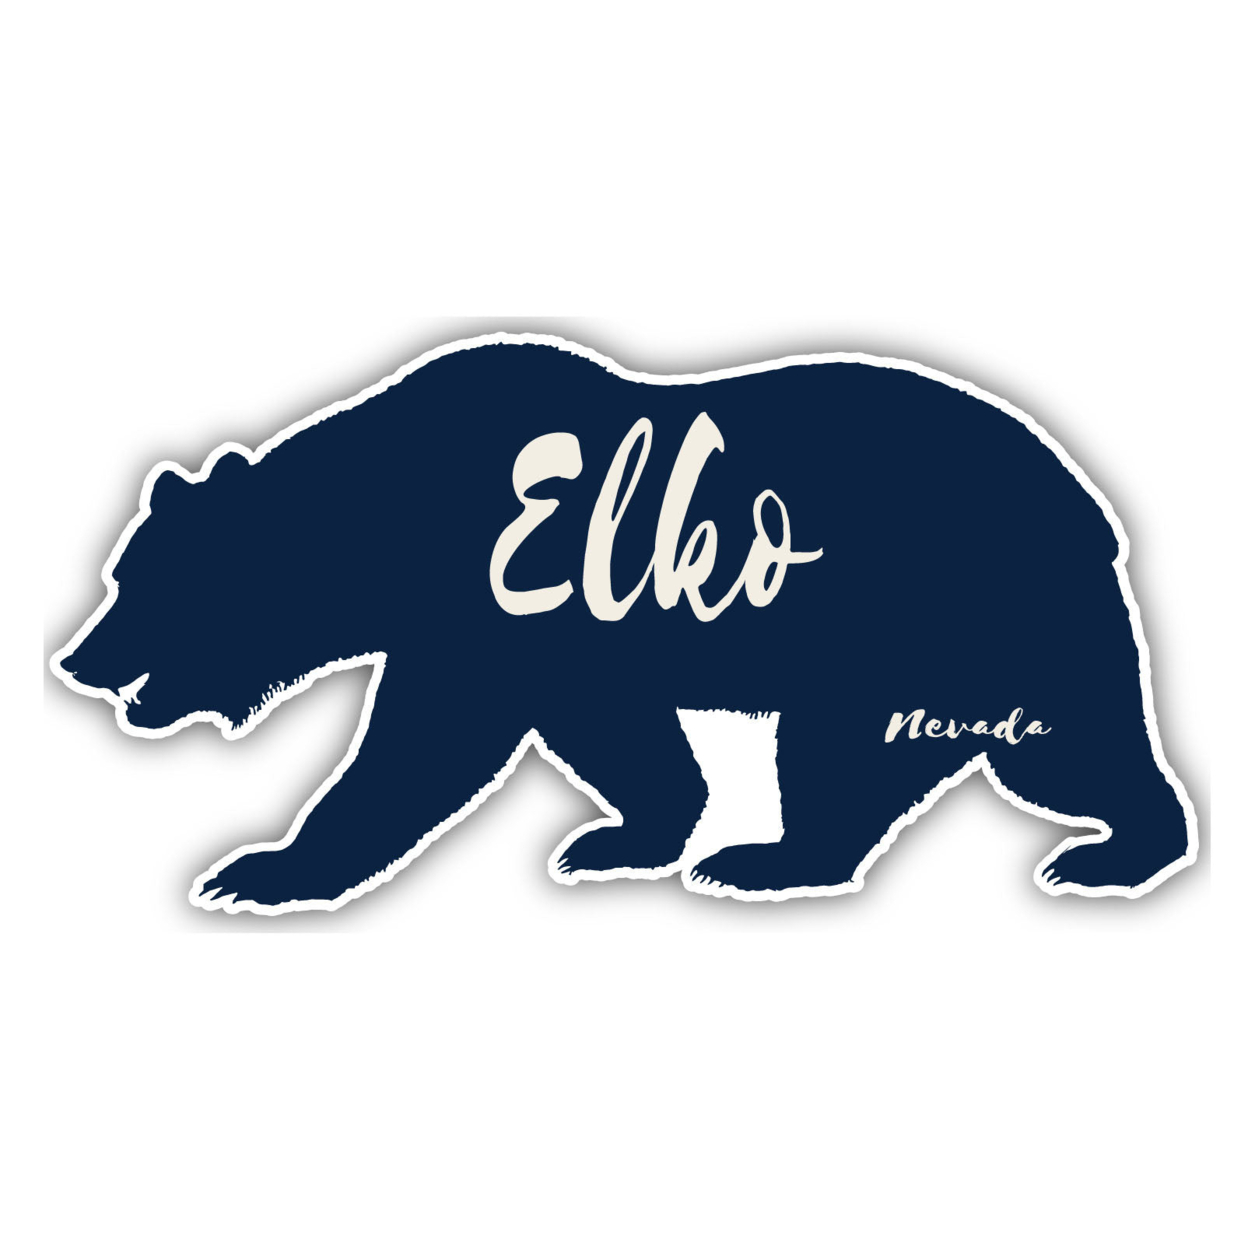 Elko Nevada Souvenir Decorative Stickers (Choose Theme And Size) - Single Unit, 8-Inch, Bear